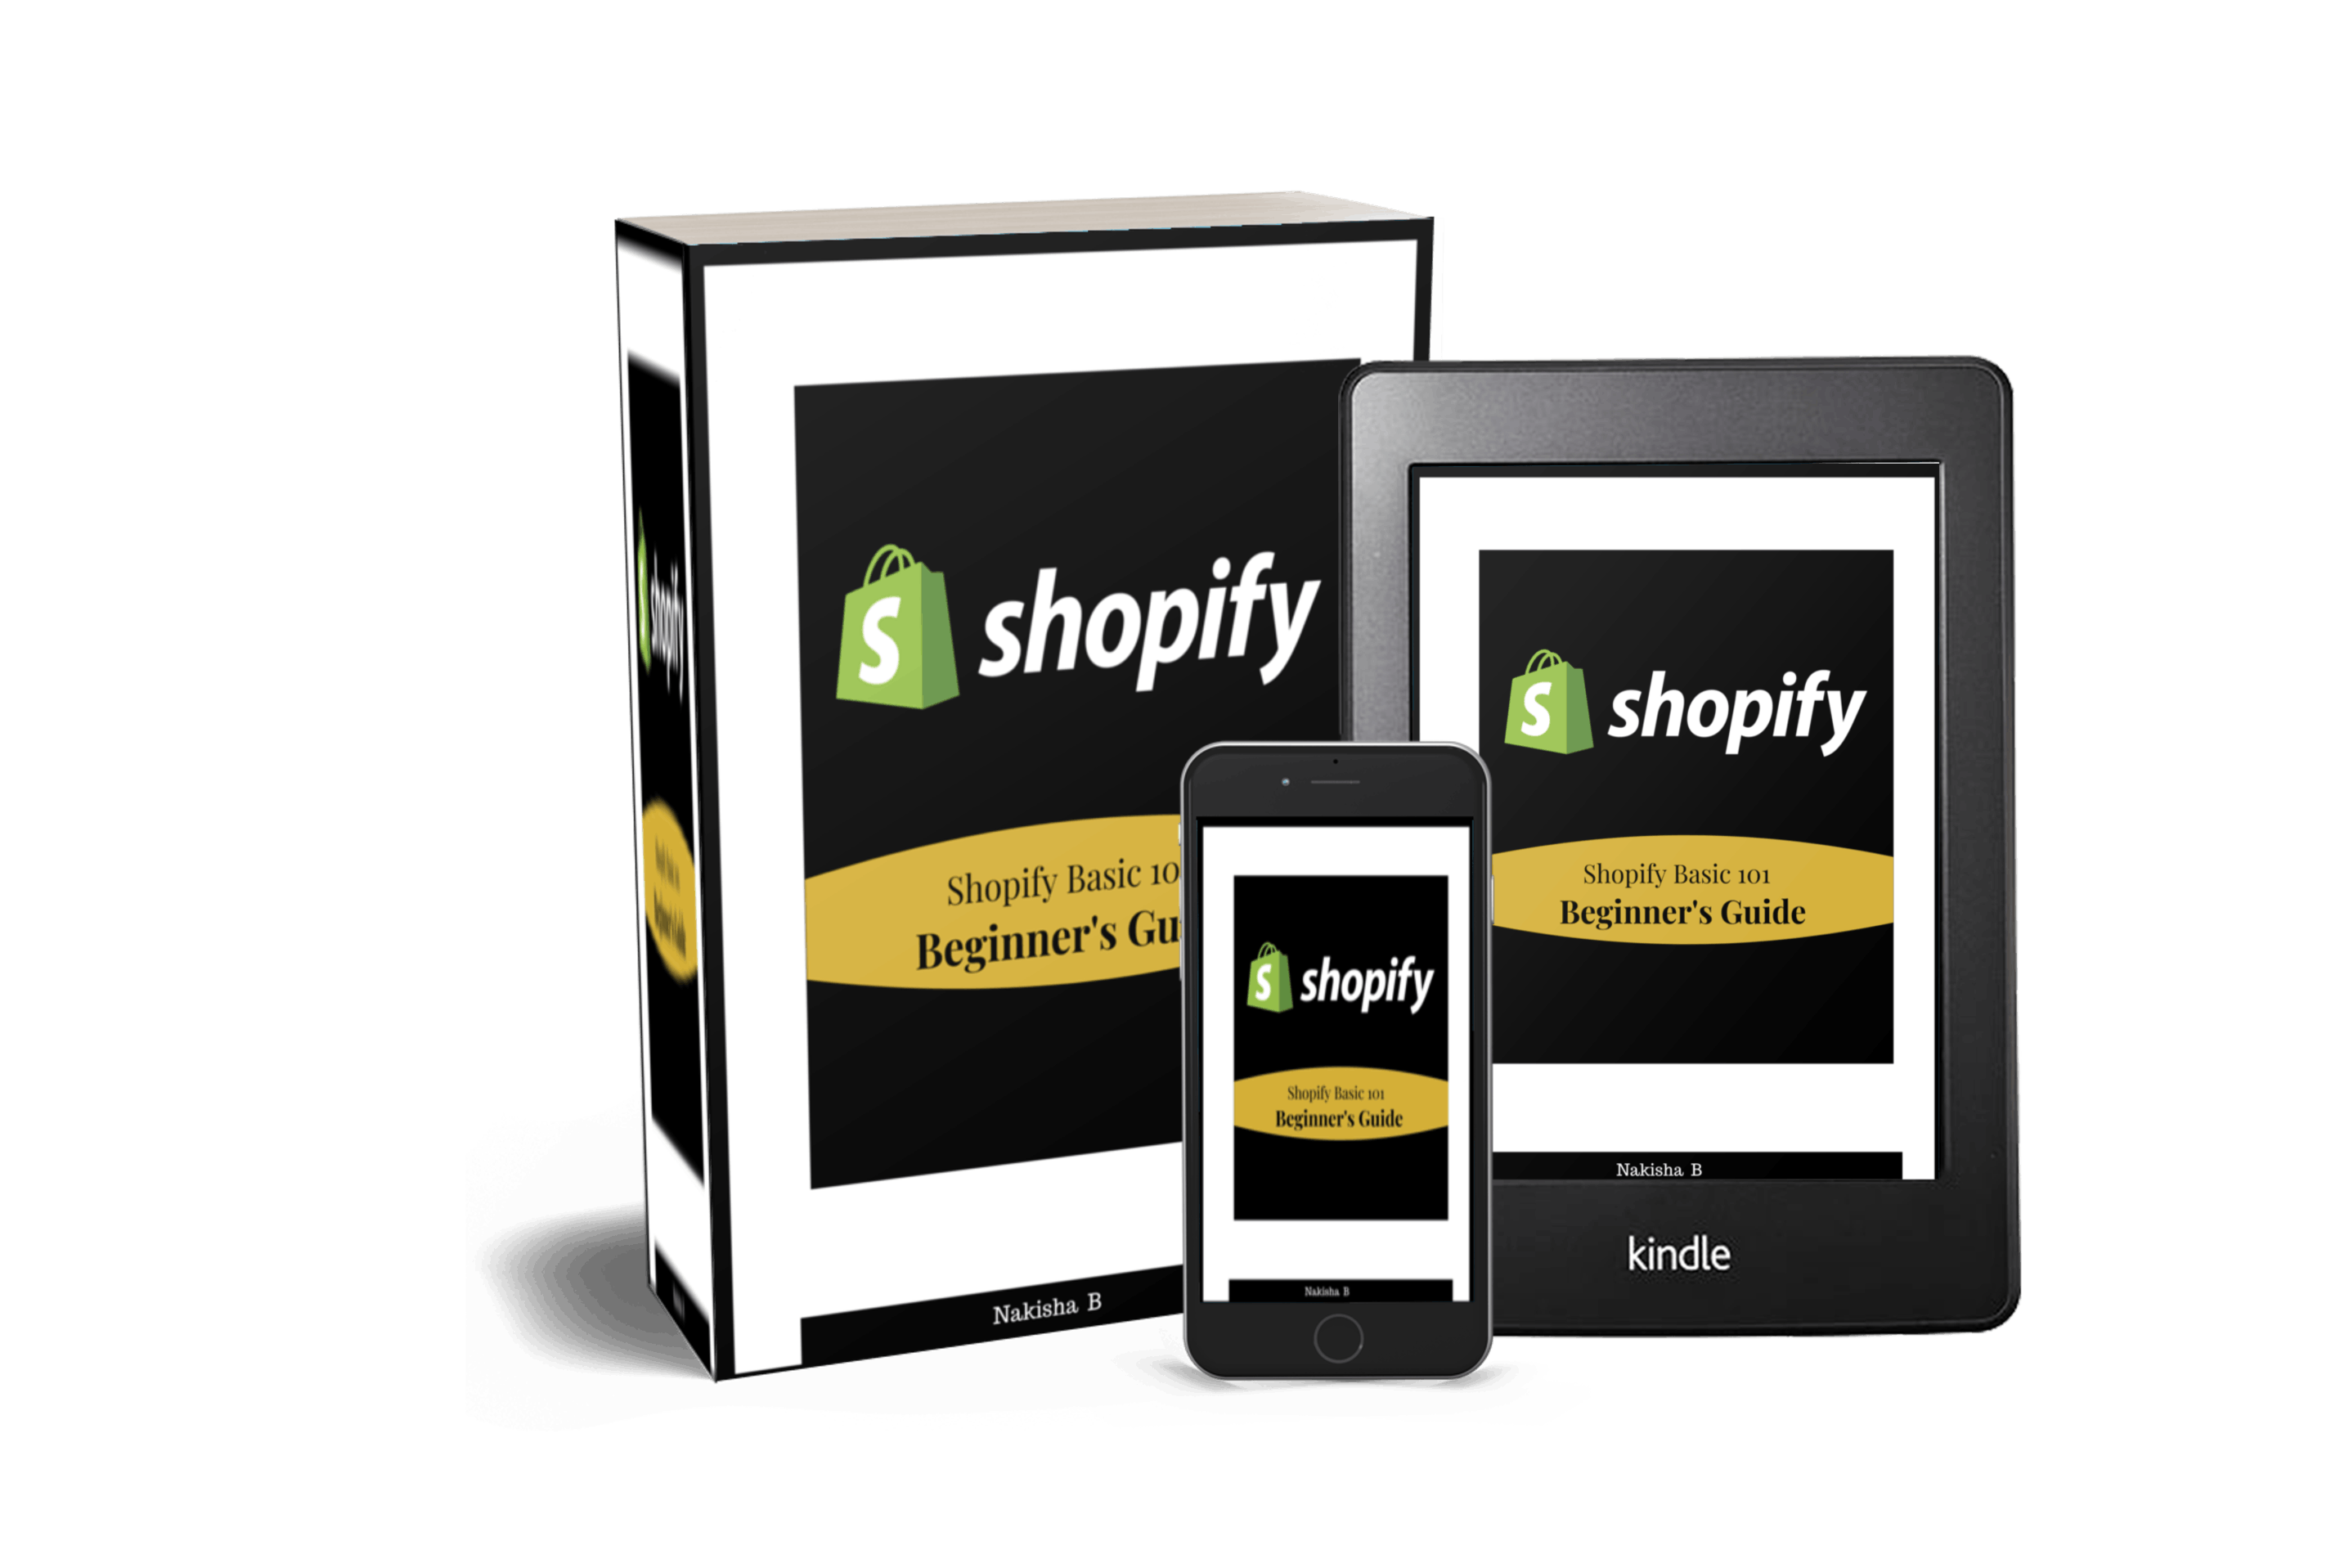 Shopify Basic 101